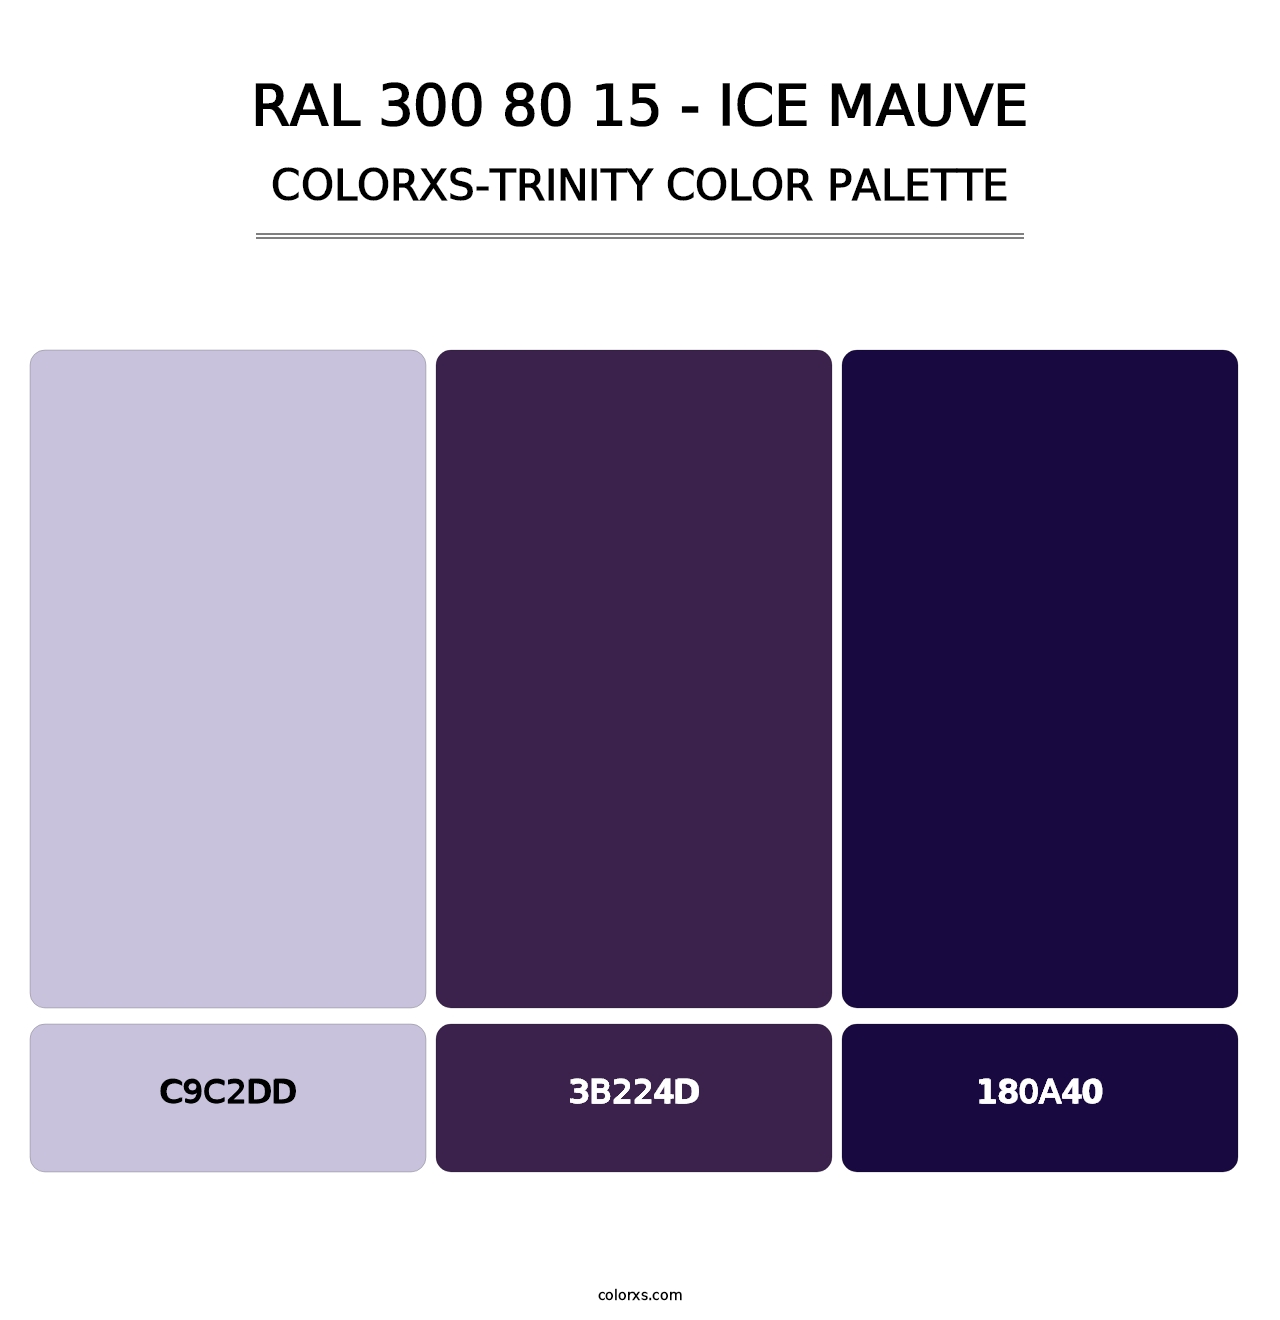 RAL 300 80 15 - Ice Mauve - Colorxs Trinity Palette